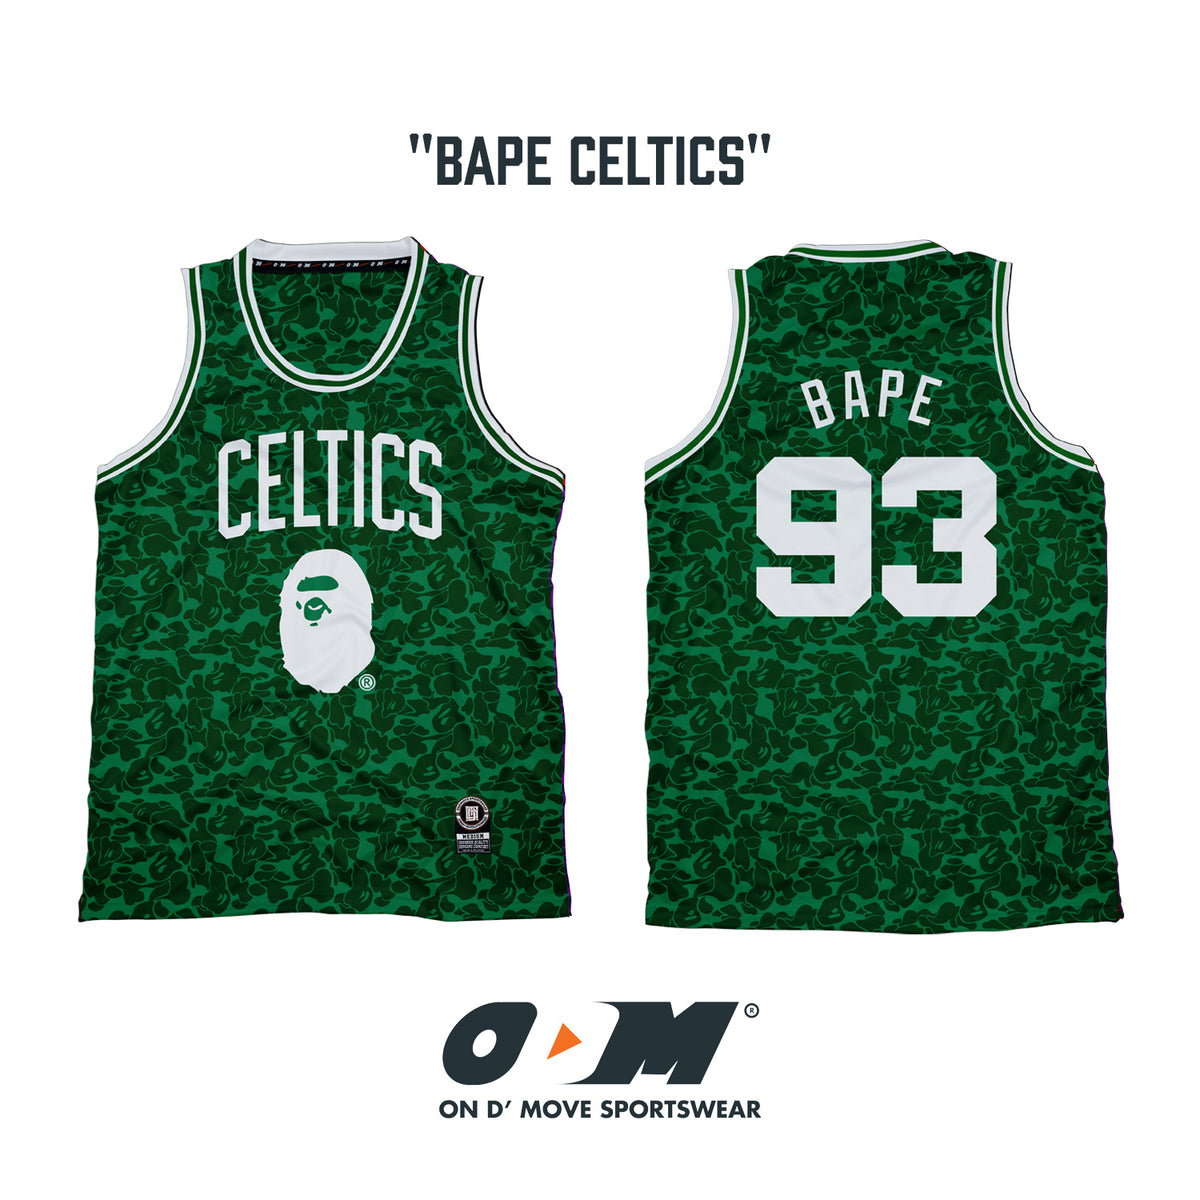 BAPE Celtics Shorts – On D' Move Sportswear